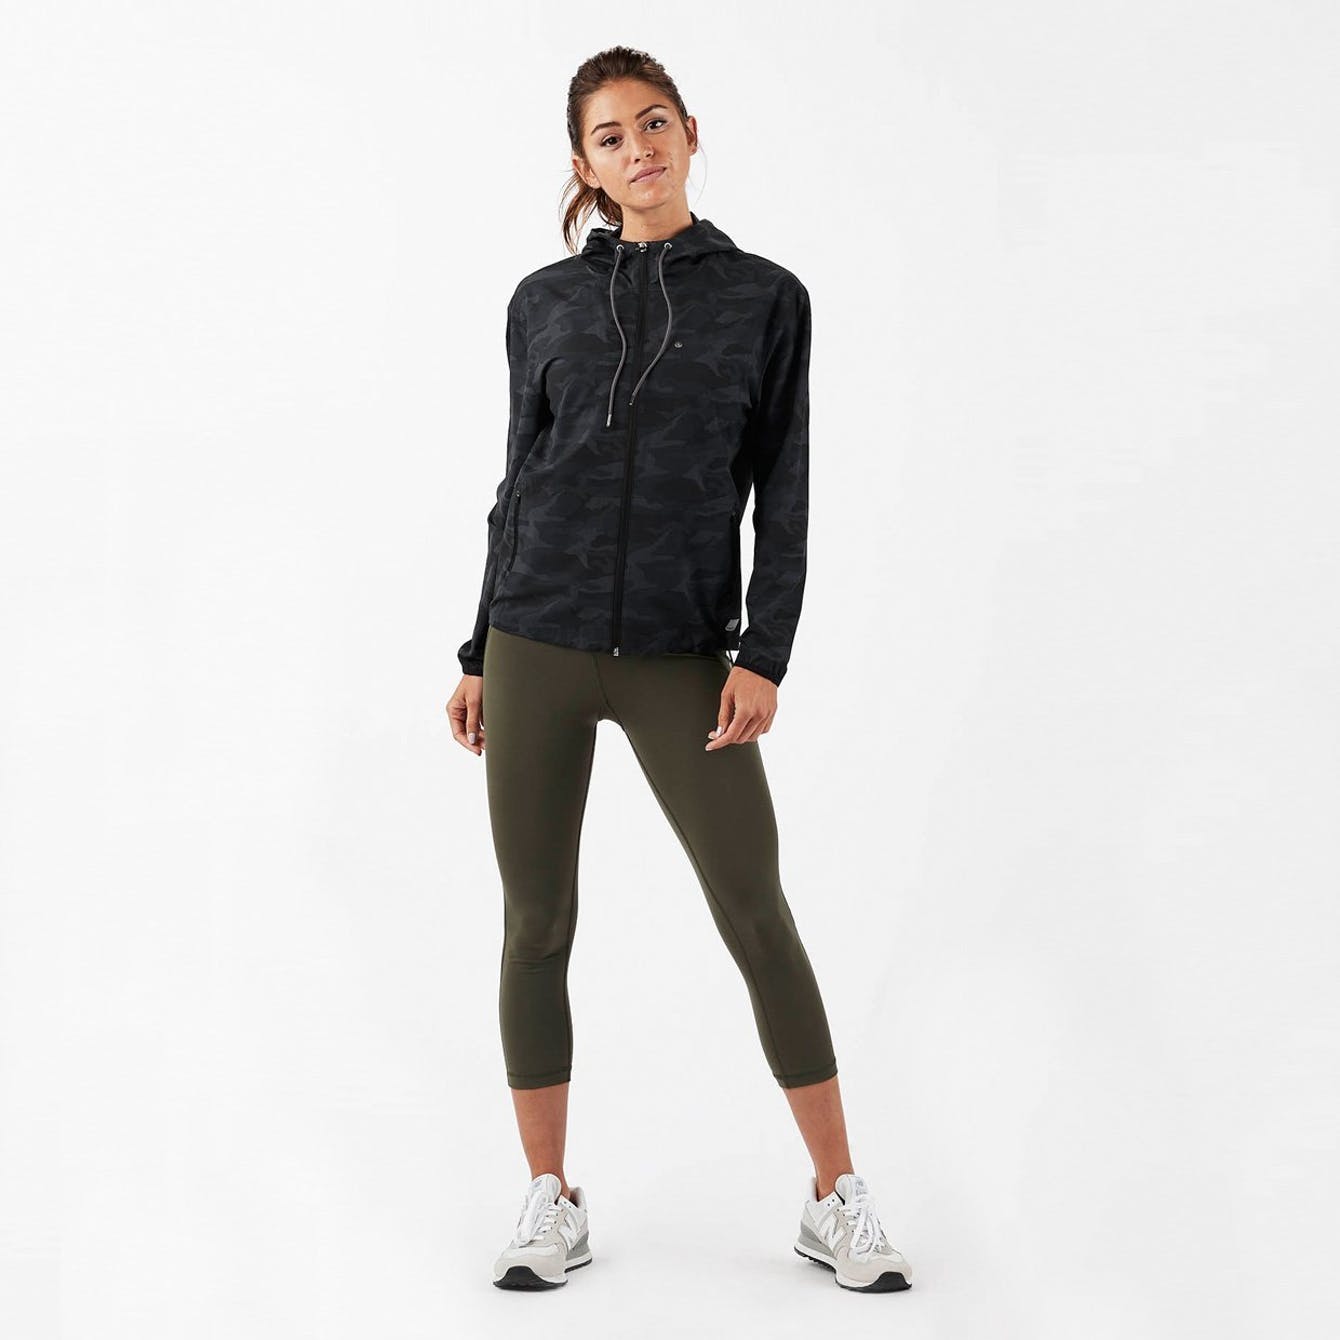 Women's Outdoor Trainer Shell Jacket - Black Camo